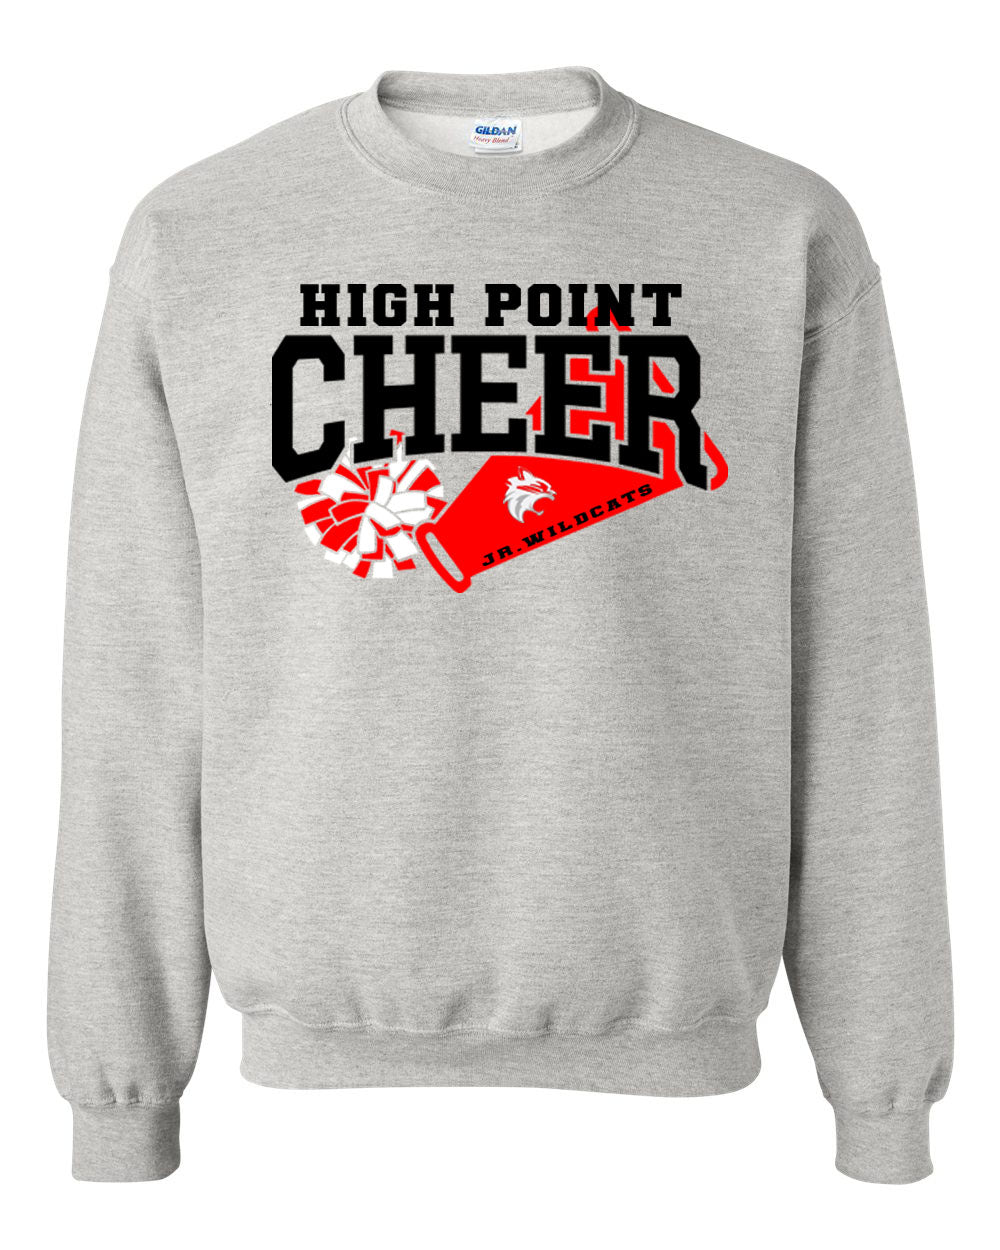 High Point Cheer Design 1 non hooded sweatshirt